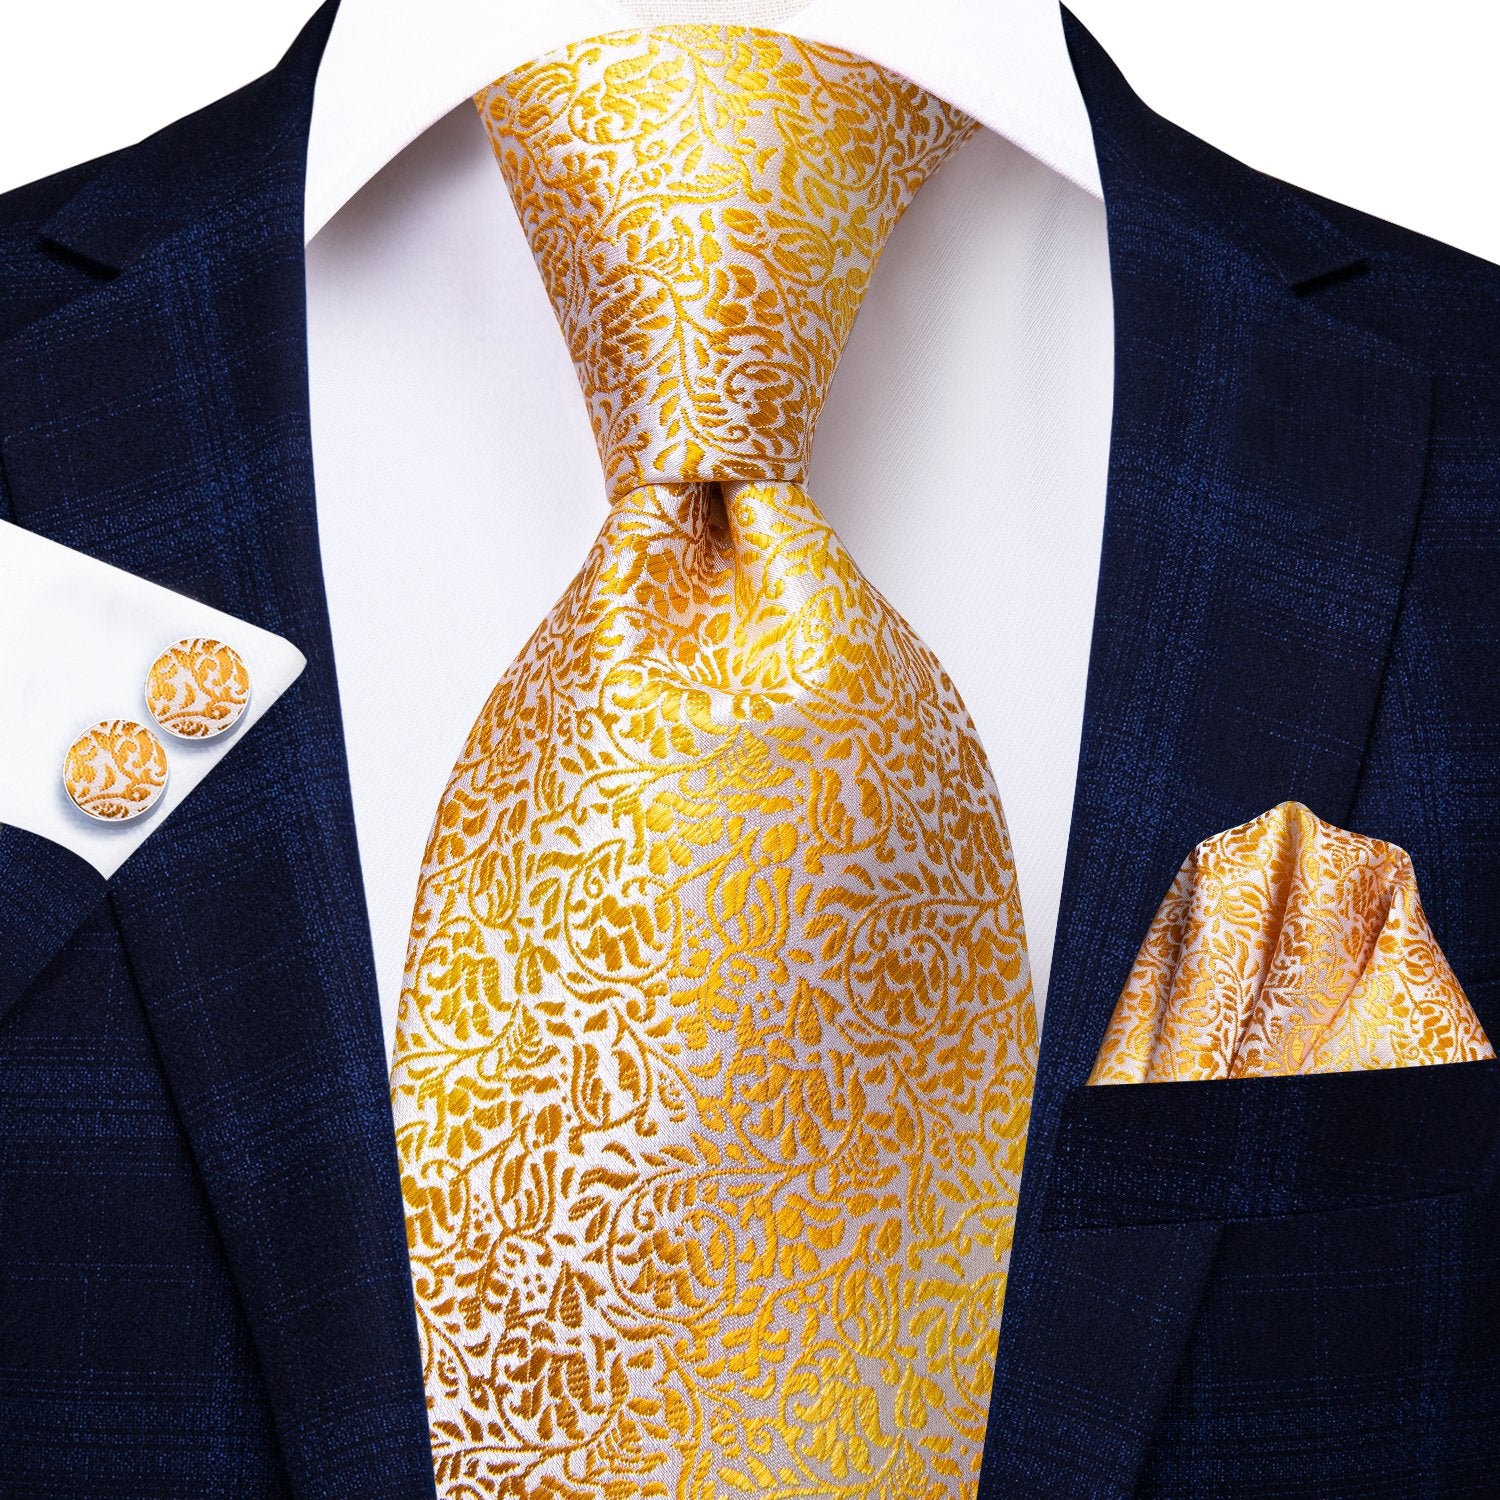 Gold Leaves Silk Tie Handkerchief Cufflinks Set with Collar Pin